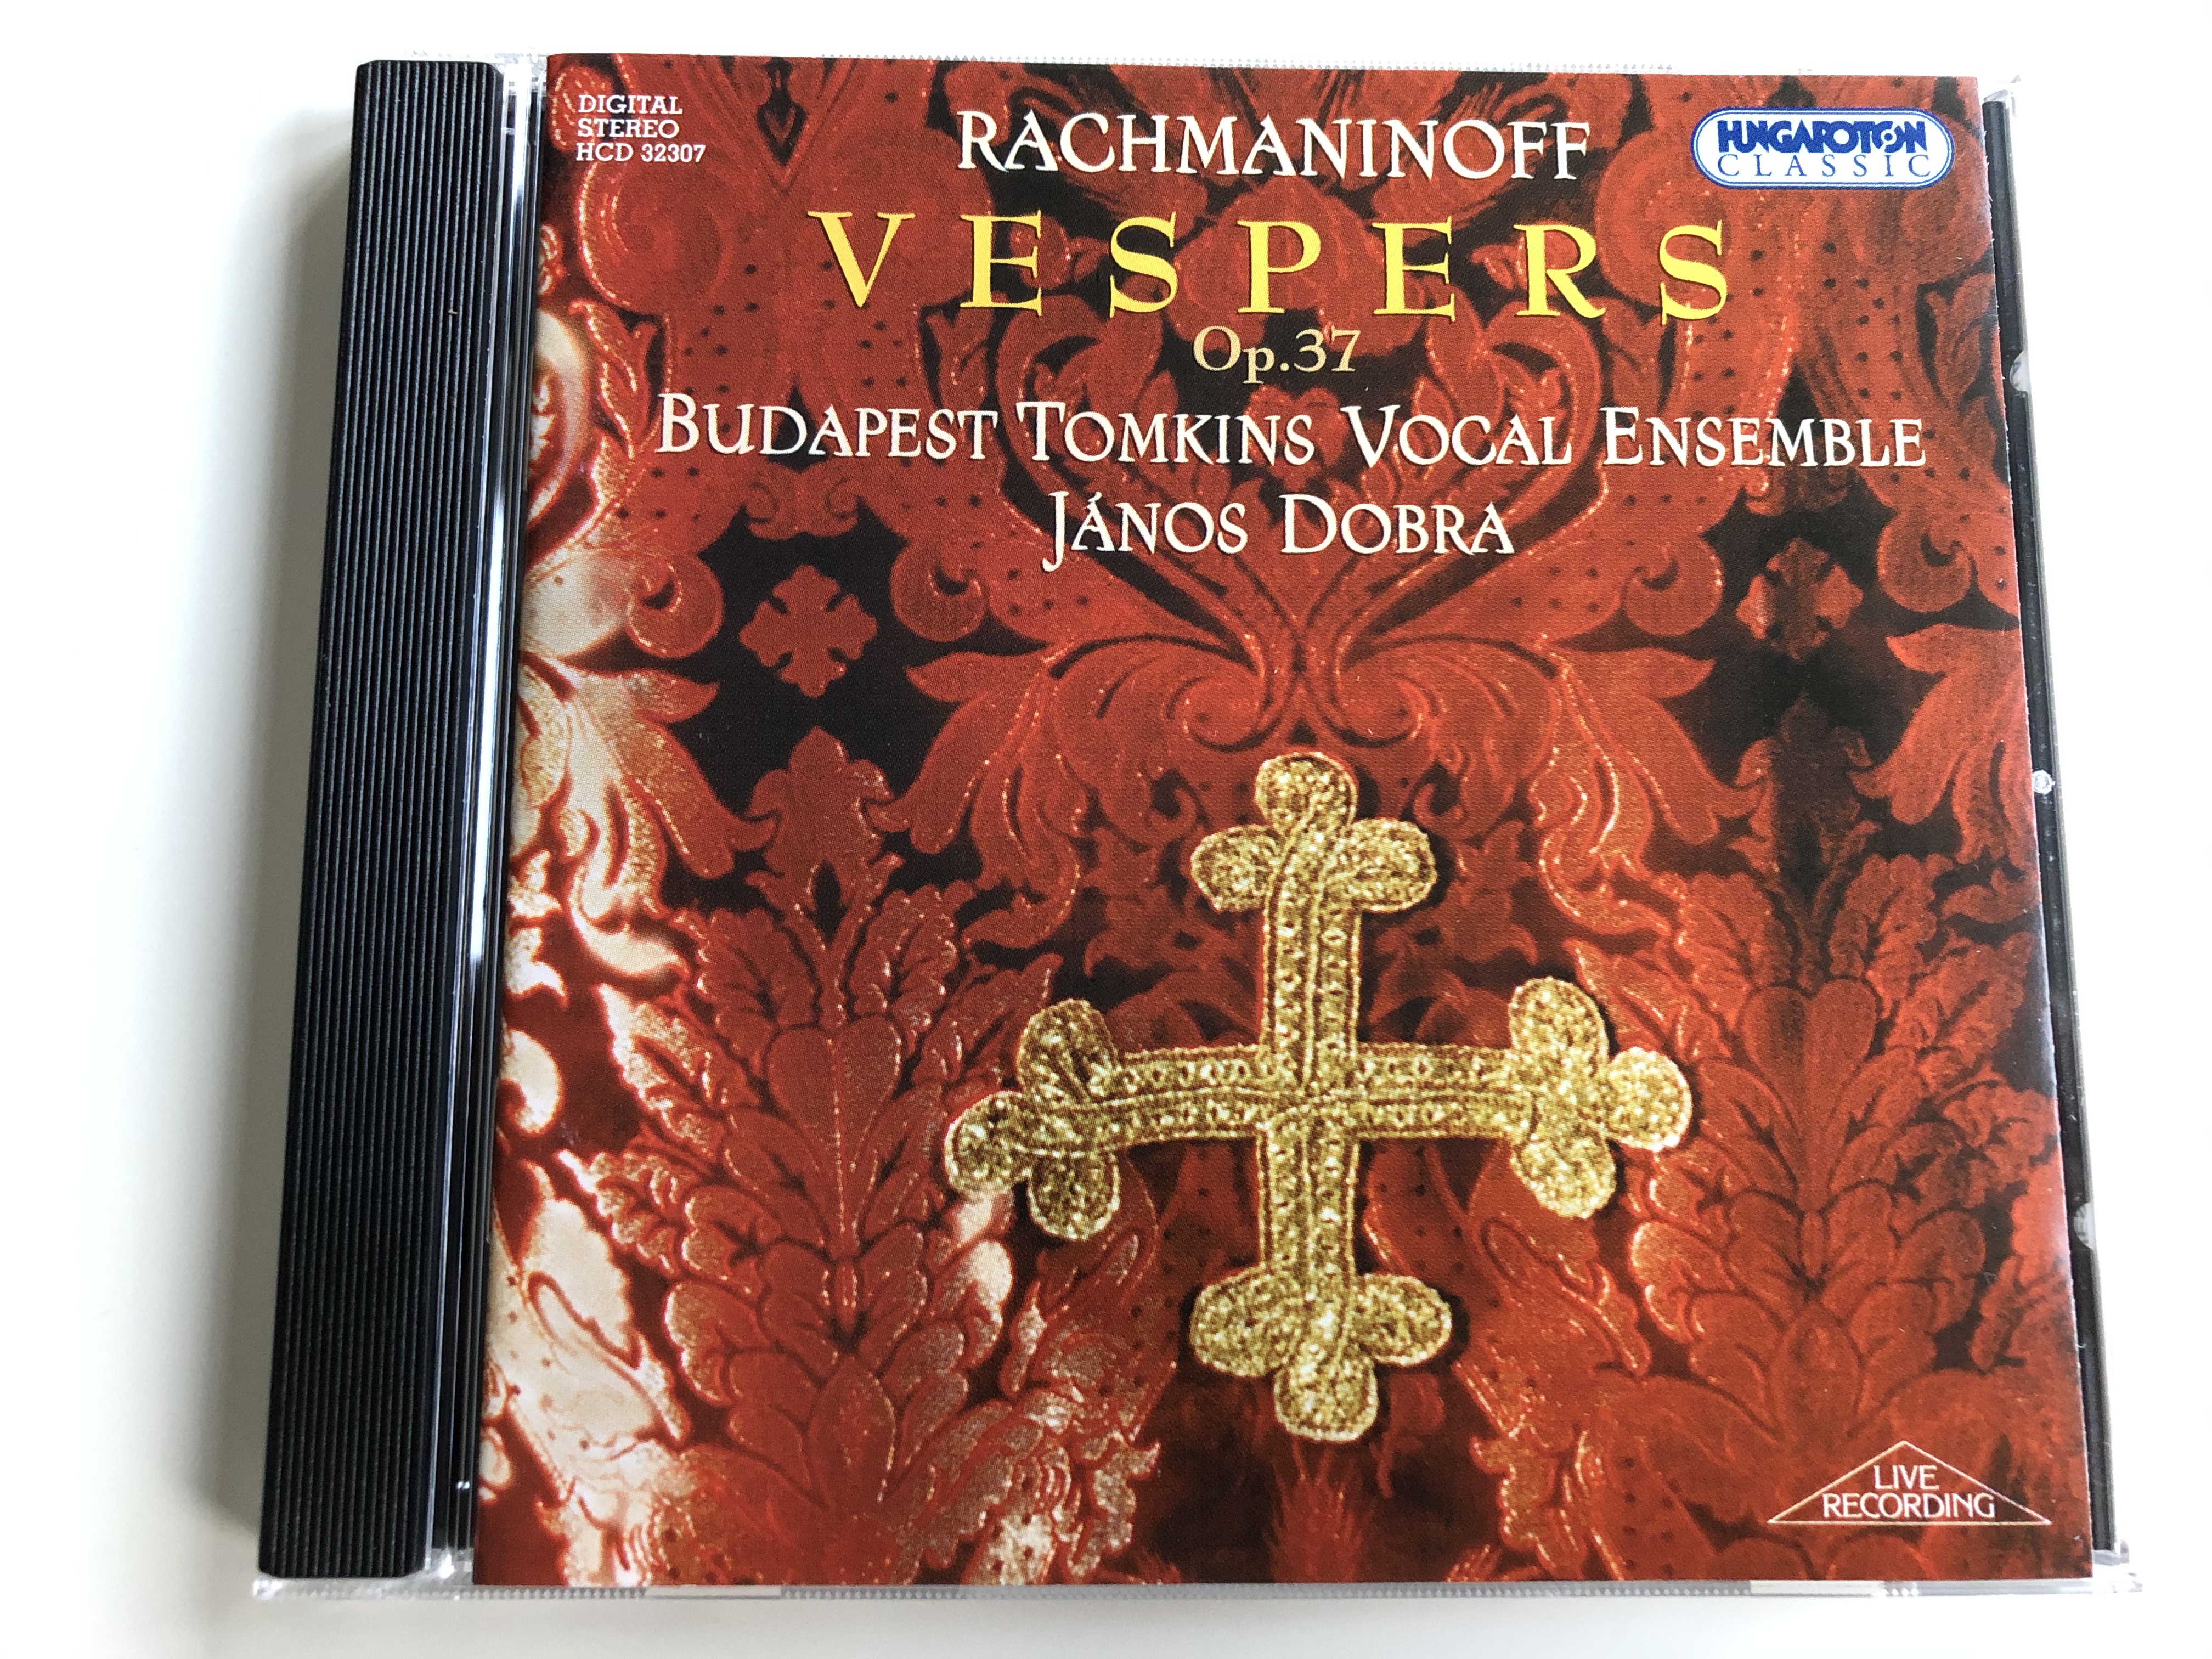 rachmaninoff-vespers-op.-37-budapest-tomkins-vocal-ensemble-janos-dobra-hungaroton-classic-audio-cd-2004-stereo-hcd-32307-1-.jpg